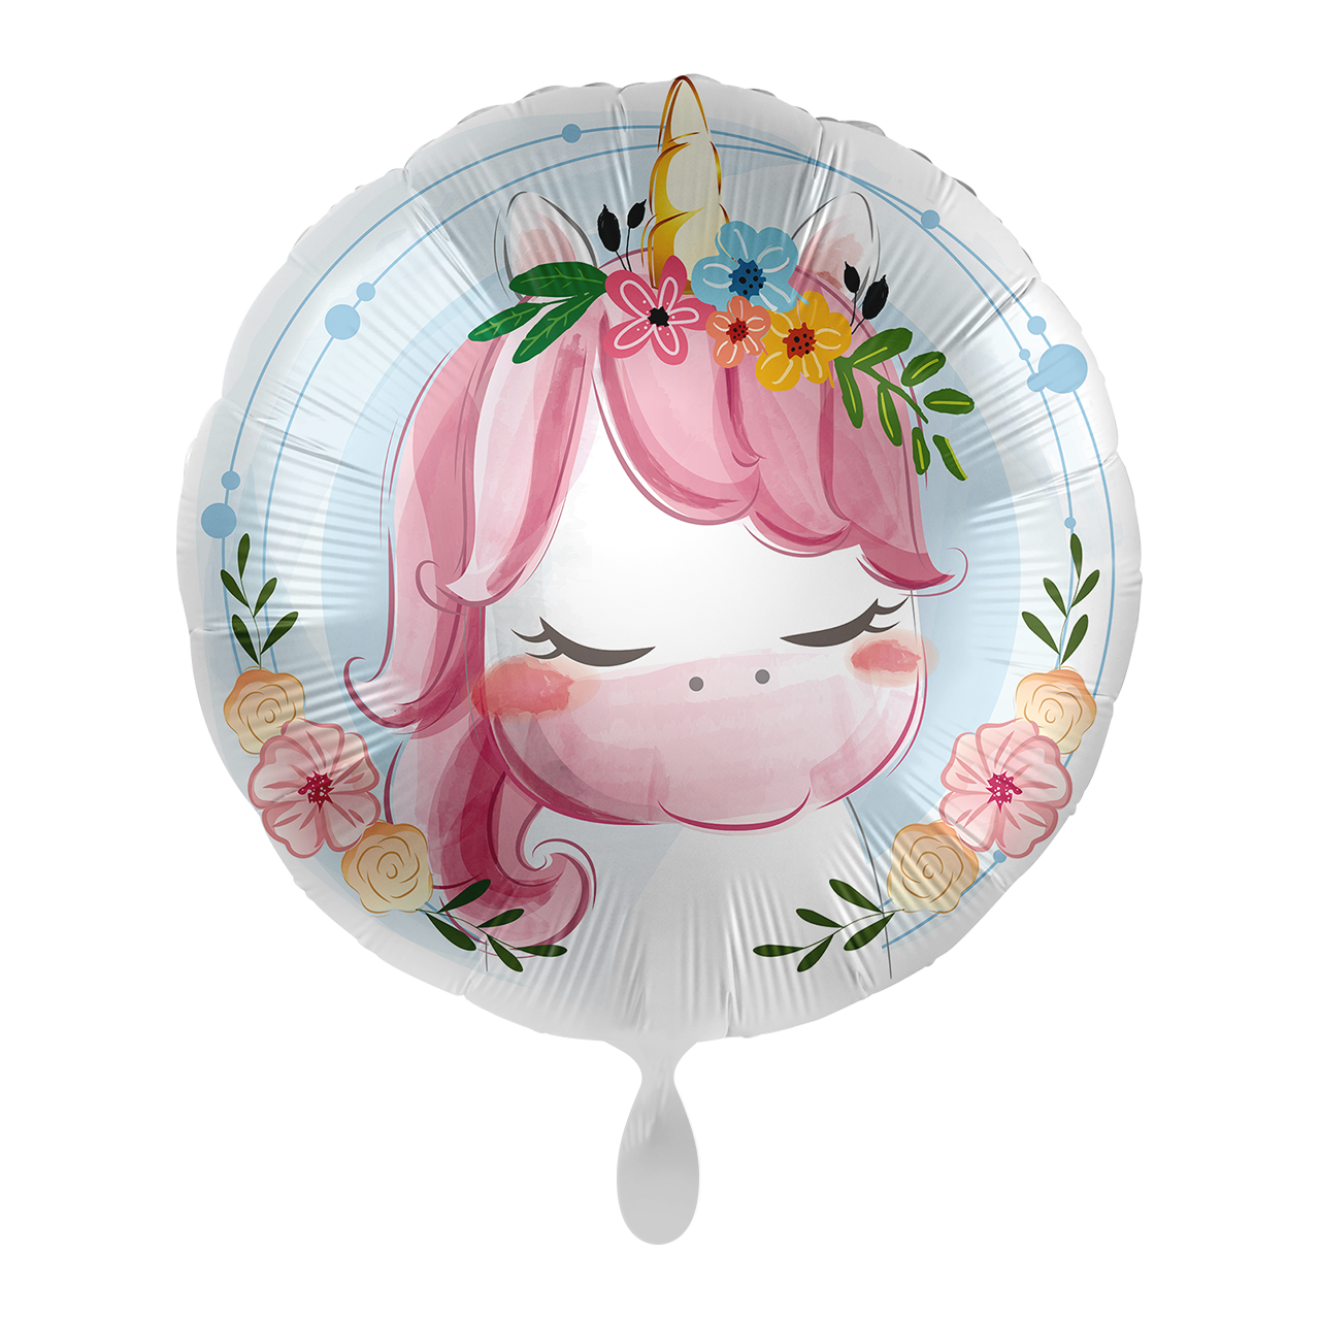 1 Balloon - Cute Unicorn - UNI